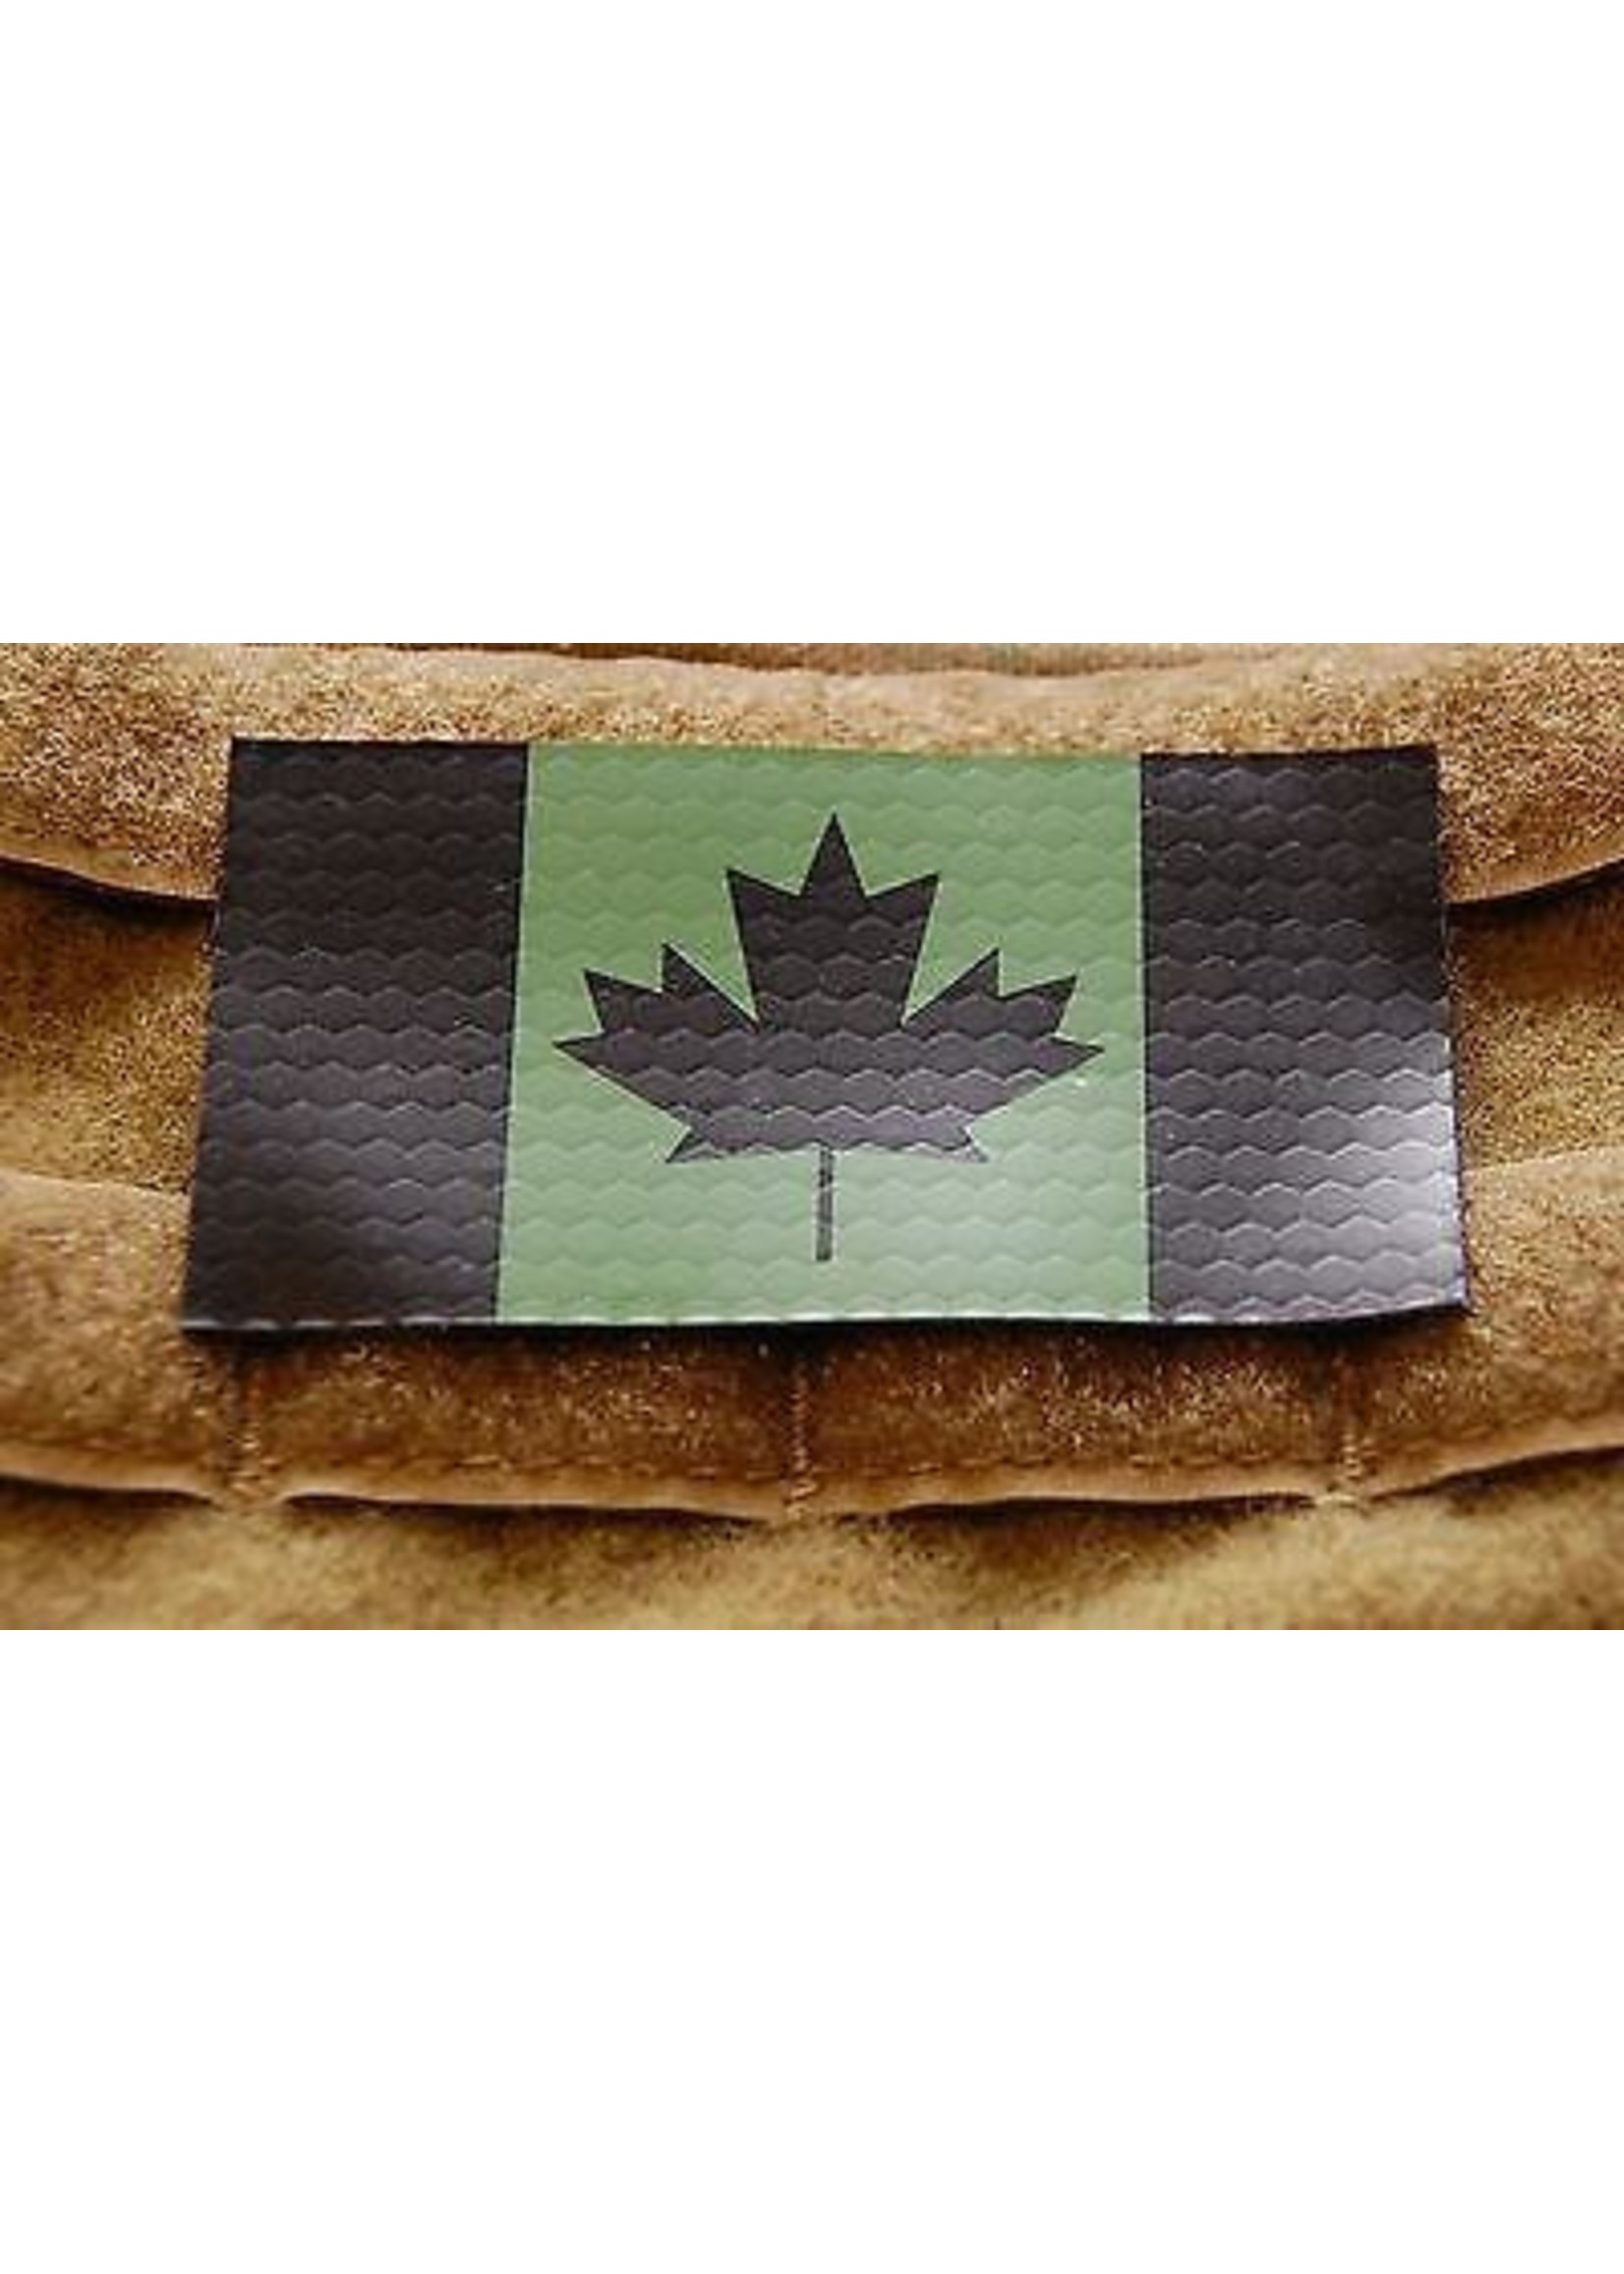 SDTAC INFRARED CANADIAN FLAG PATCH - GREEN & BLACK